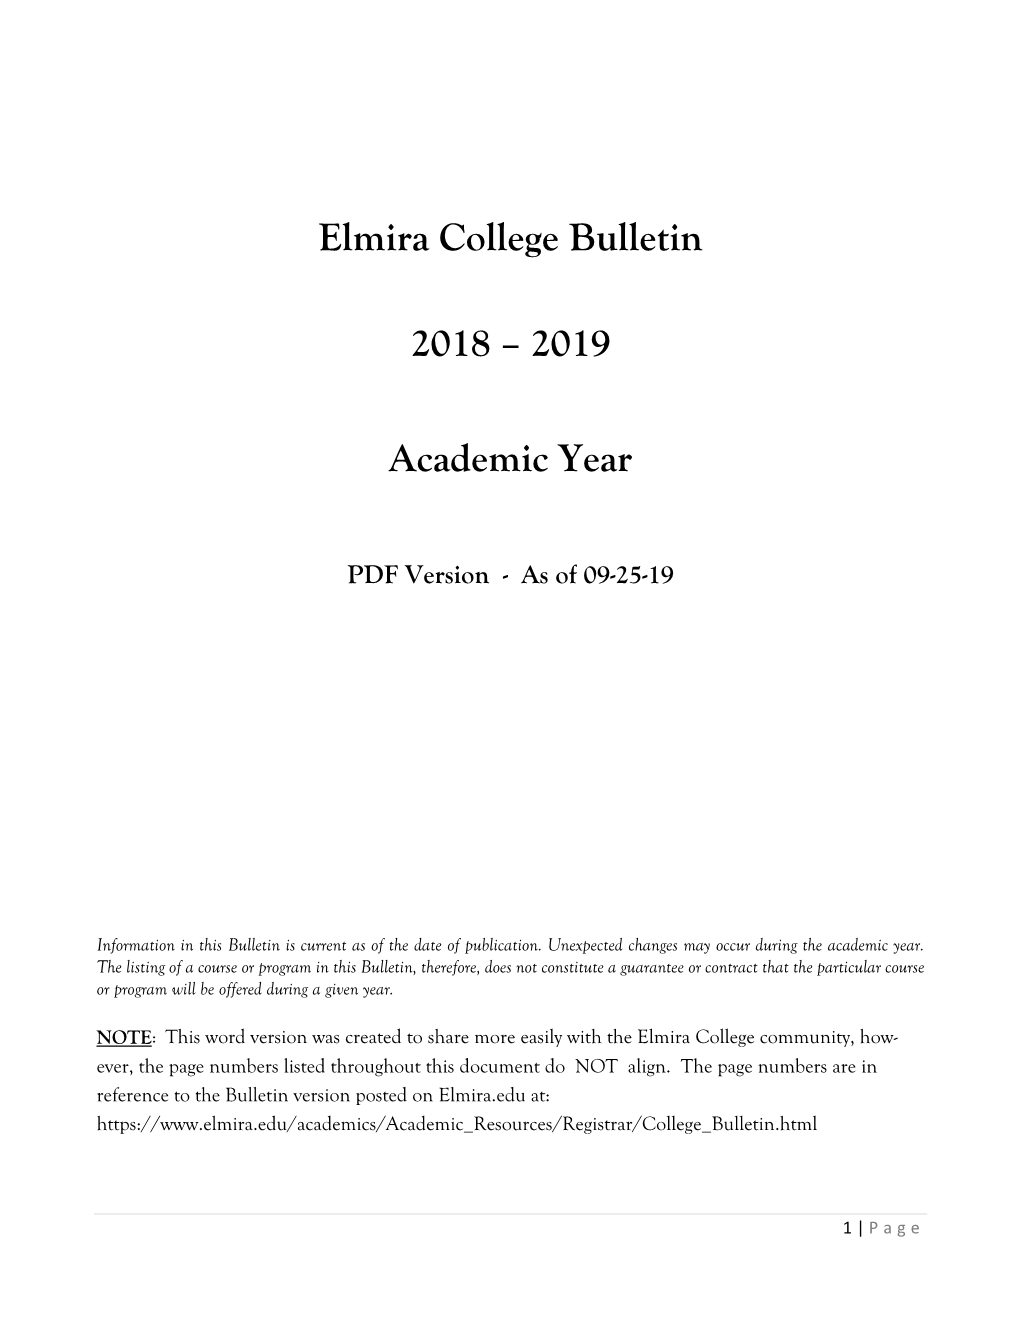 Elmira College Bulletin 2018 – 2019 Academic Year